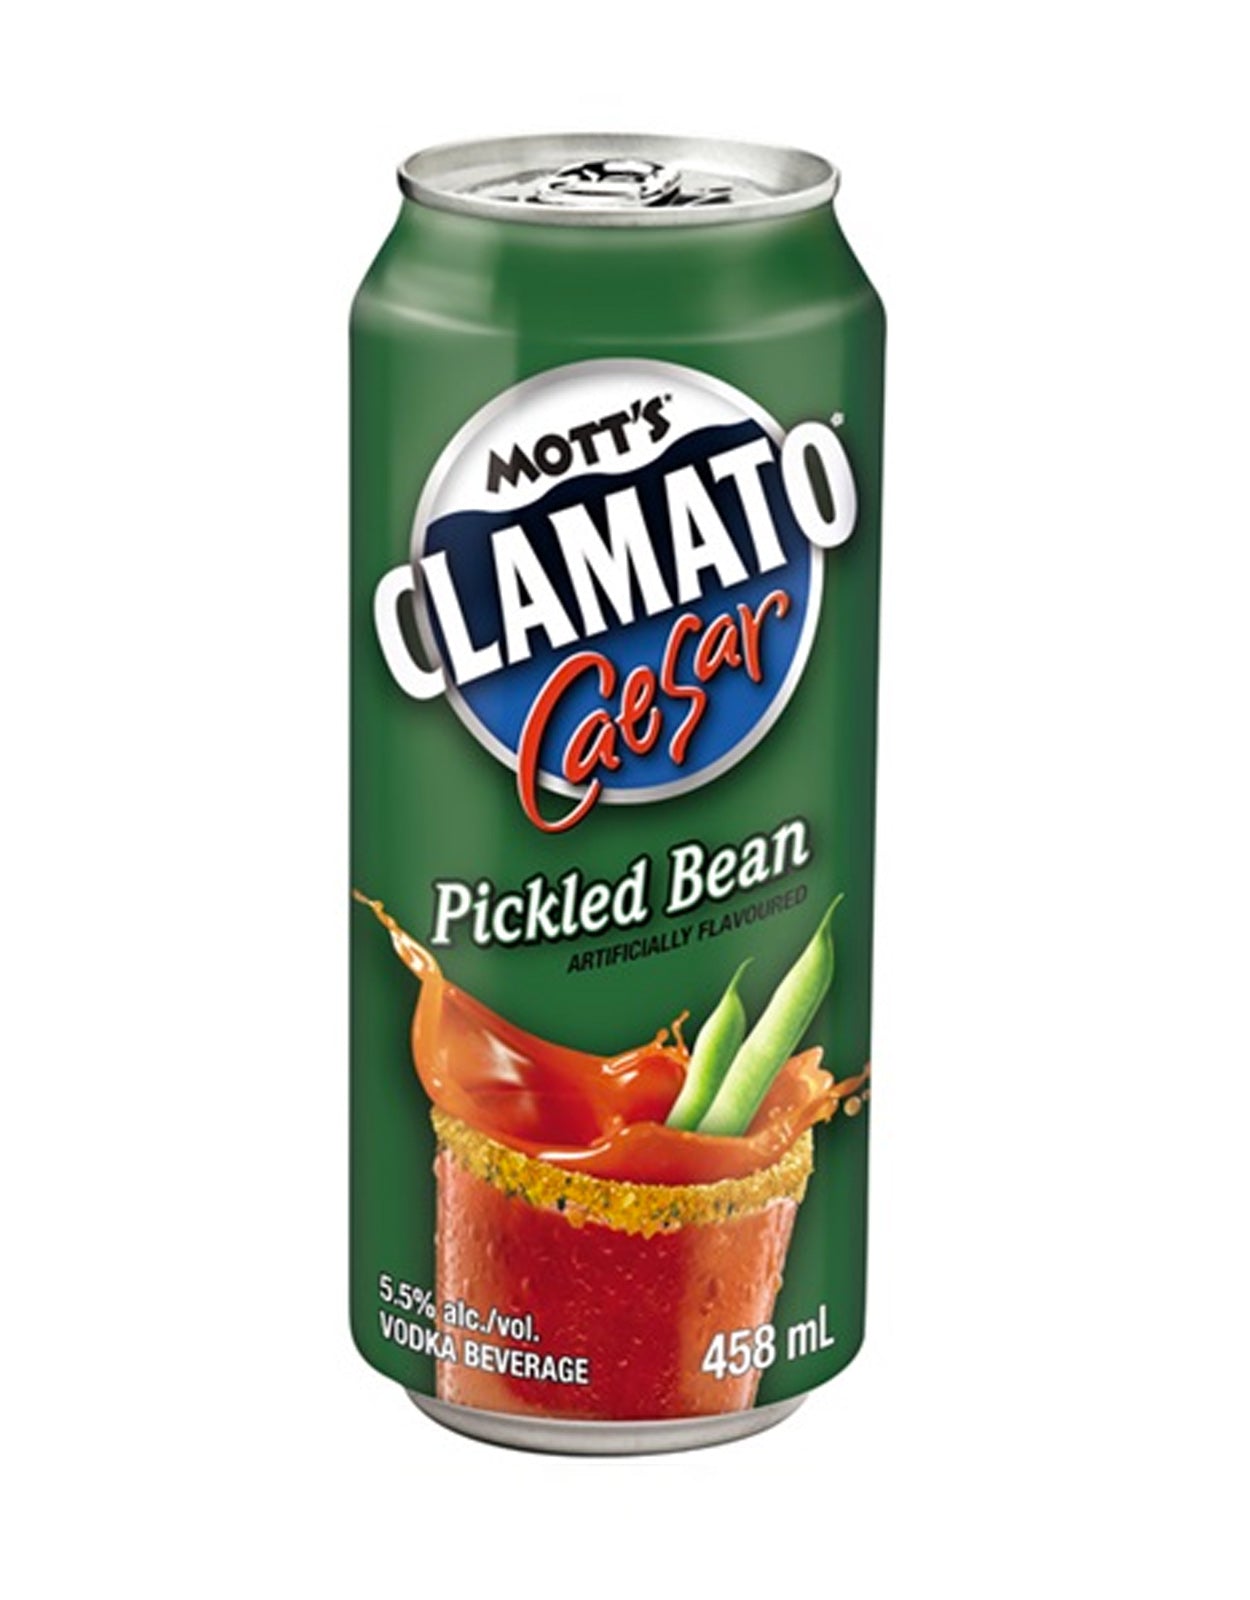 Mott's Clamato Caesar Pickled Bean 458 ml - Single Can